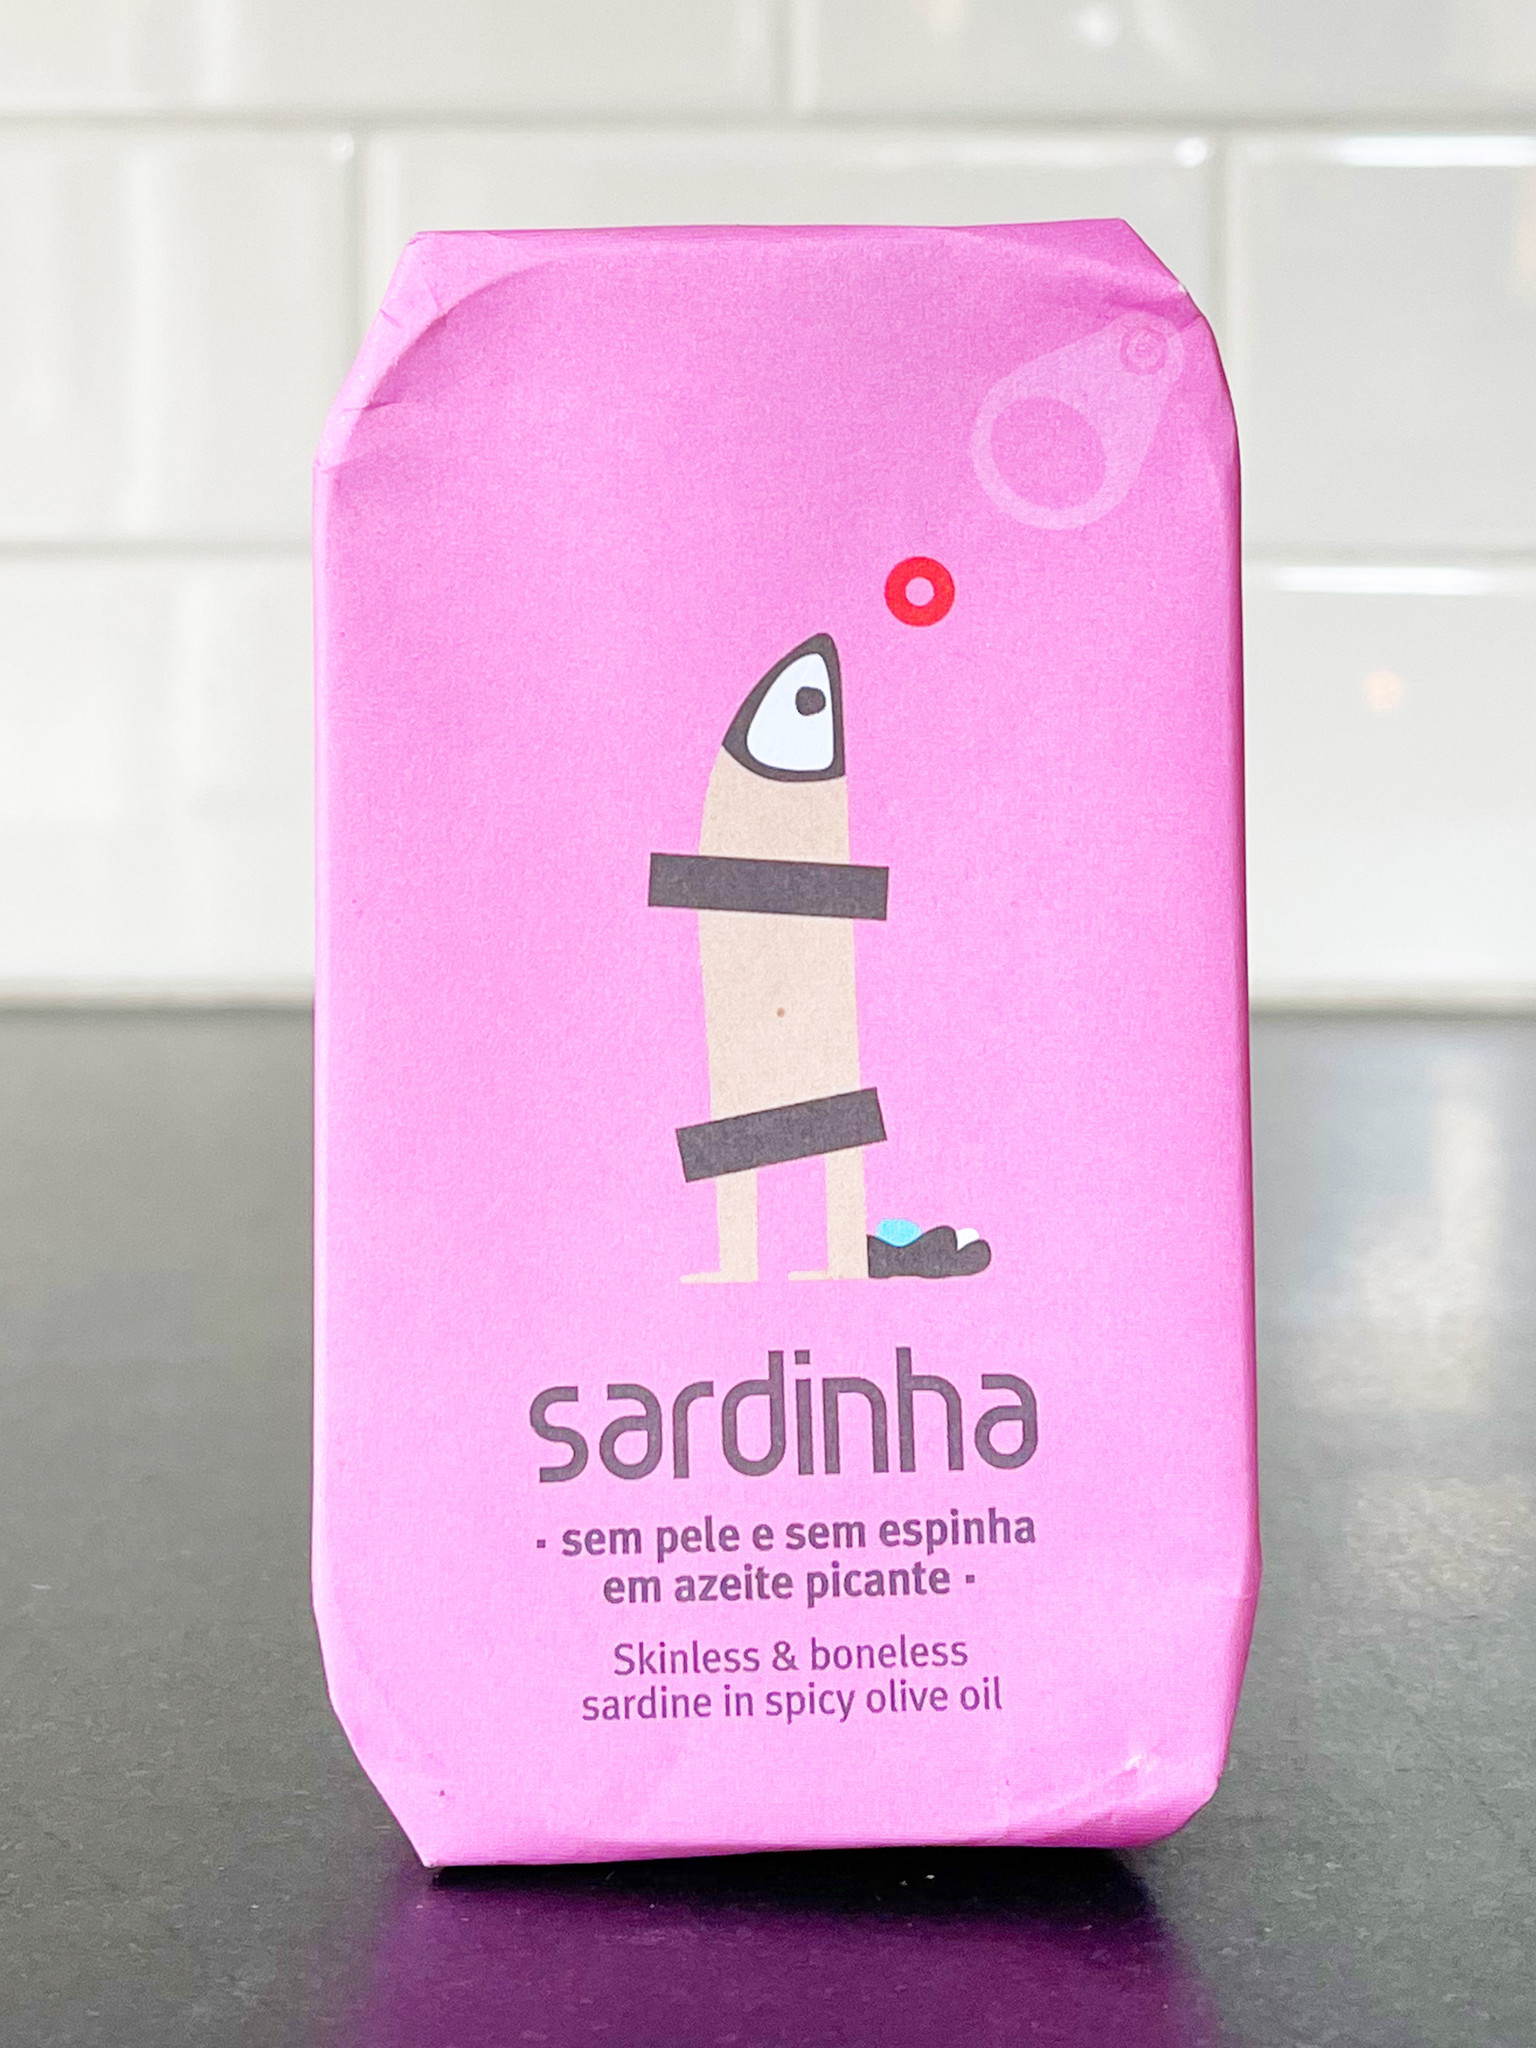 Sardinha Skinless & Boneless Sardines in Spicy Olive Oil - CORK